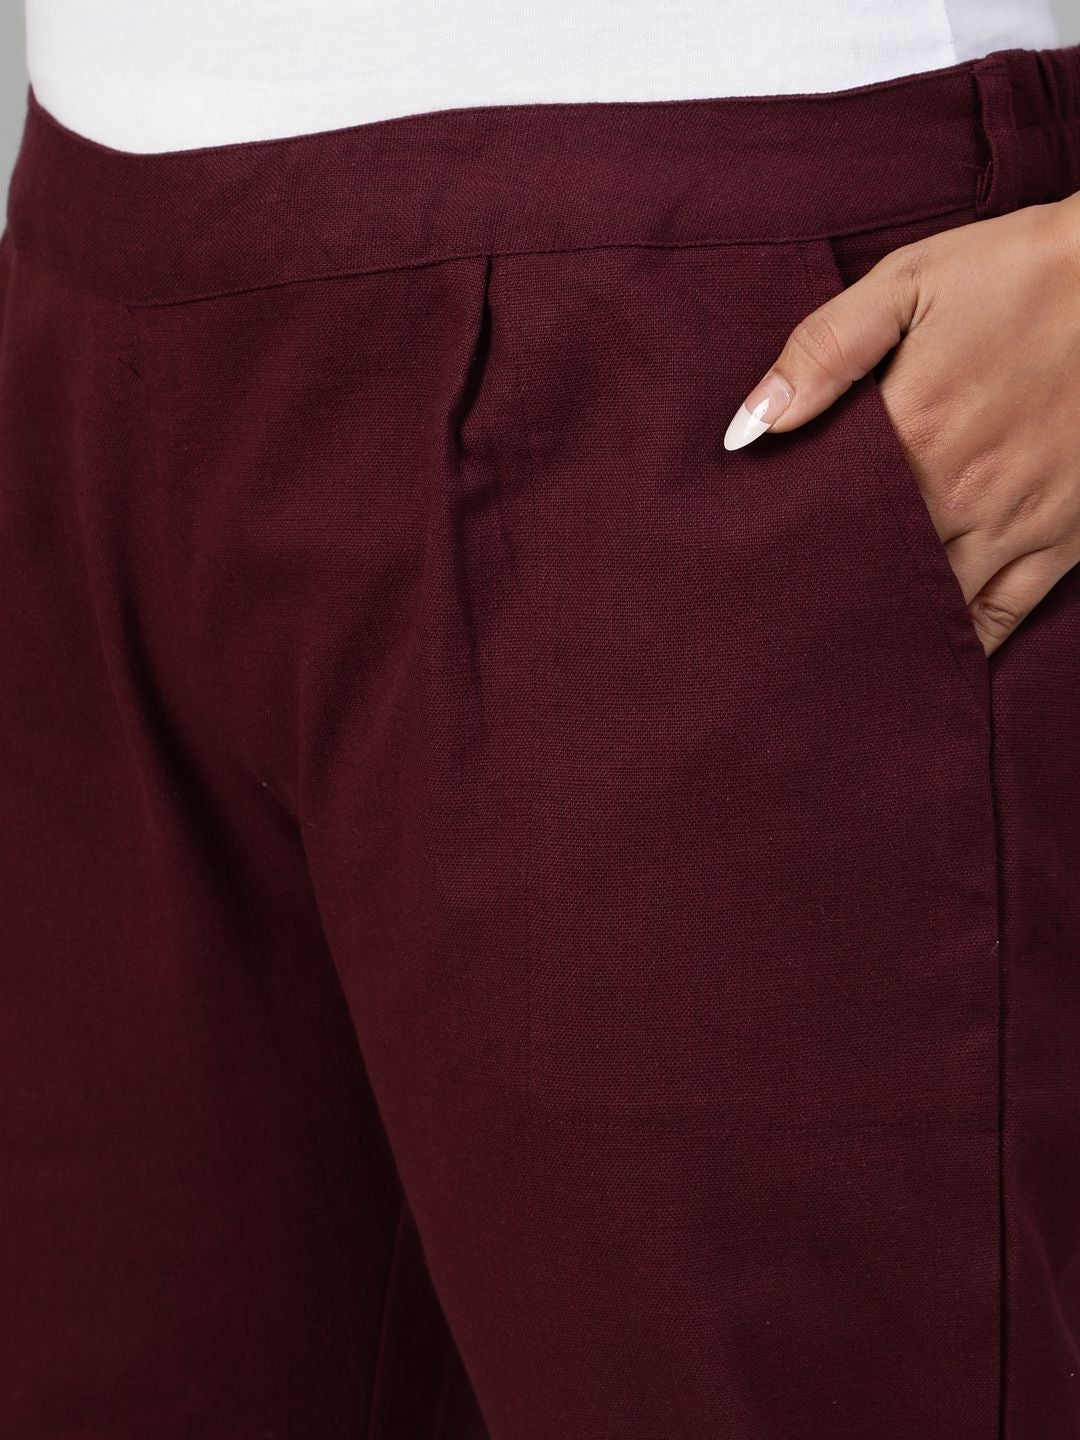 Burgundy Ethnic Cotton Slub Pants in Pleat Detail